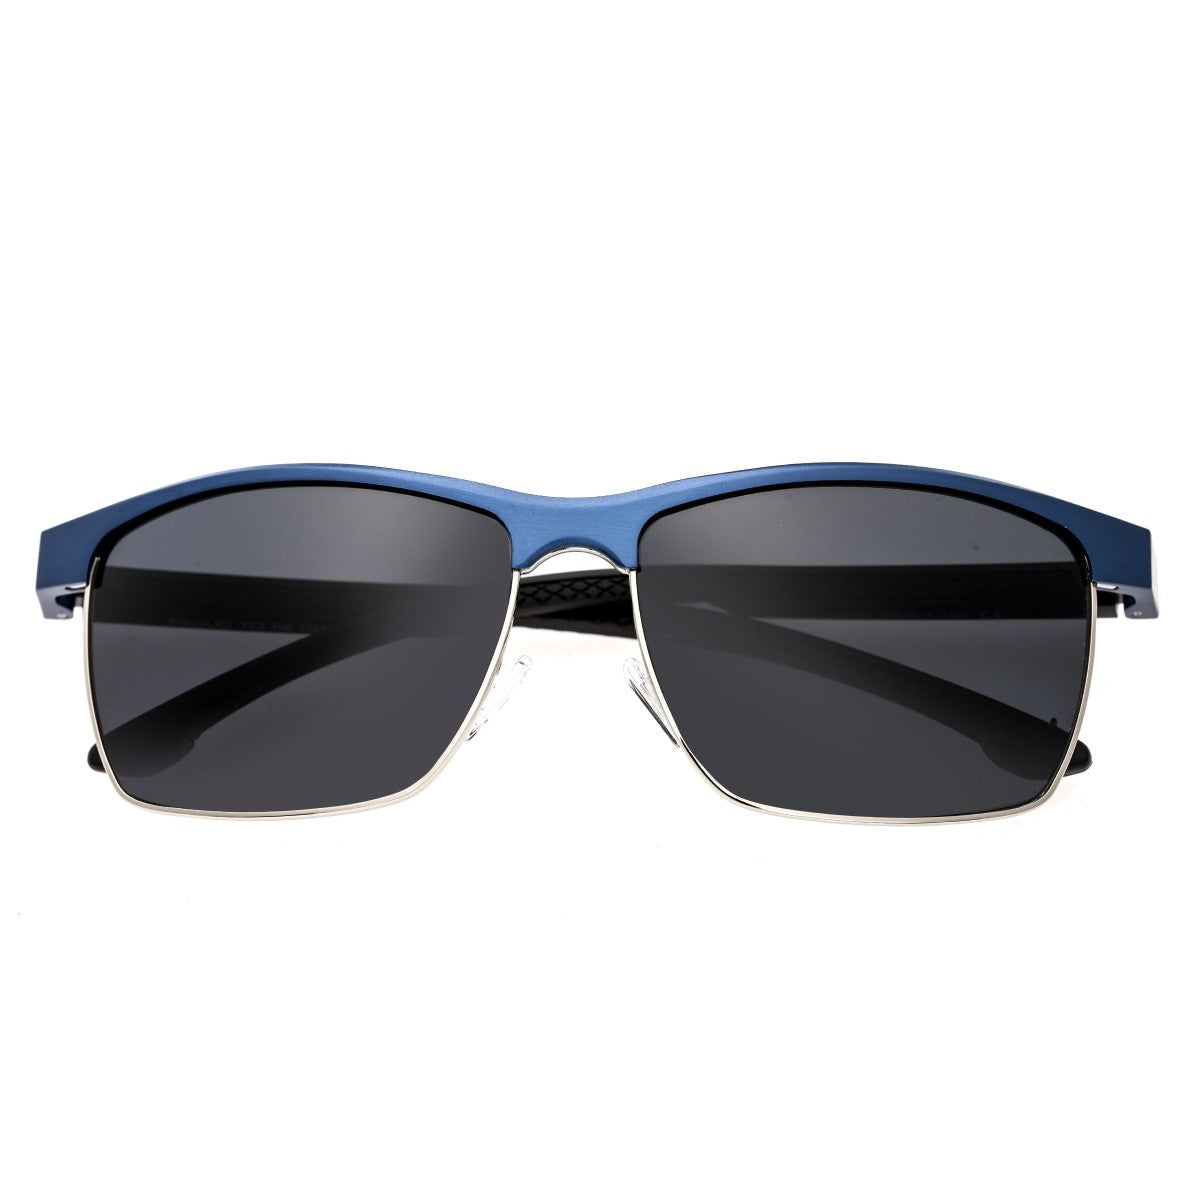 Breed Bode Aluminium Polarized Sunglasses - Blue/Black - BSG026BL